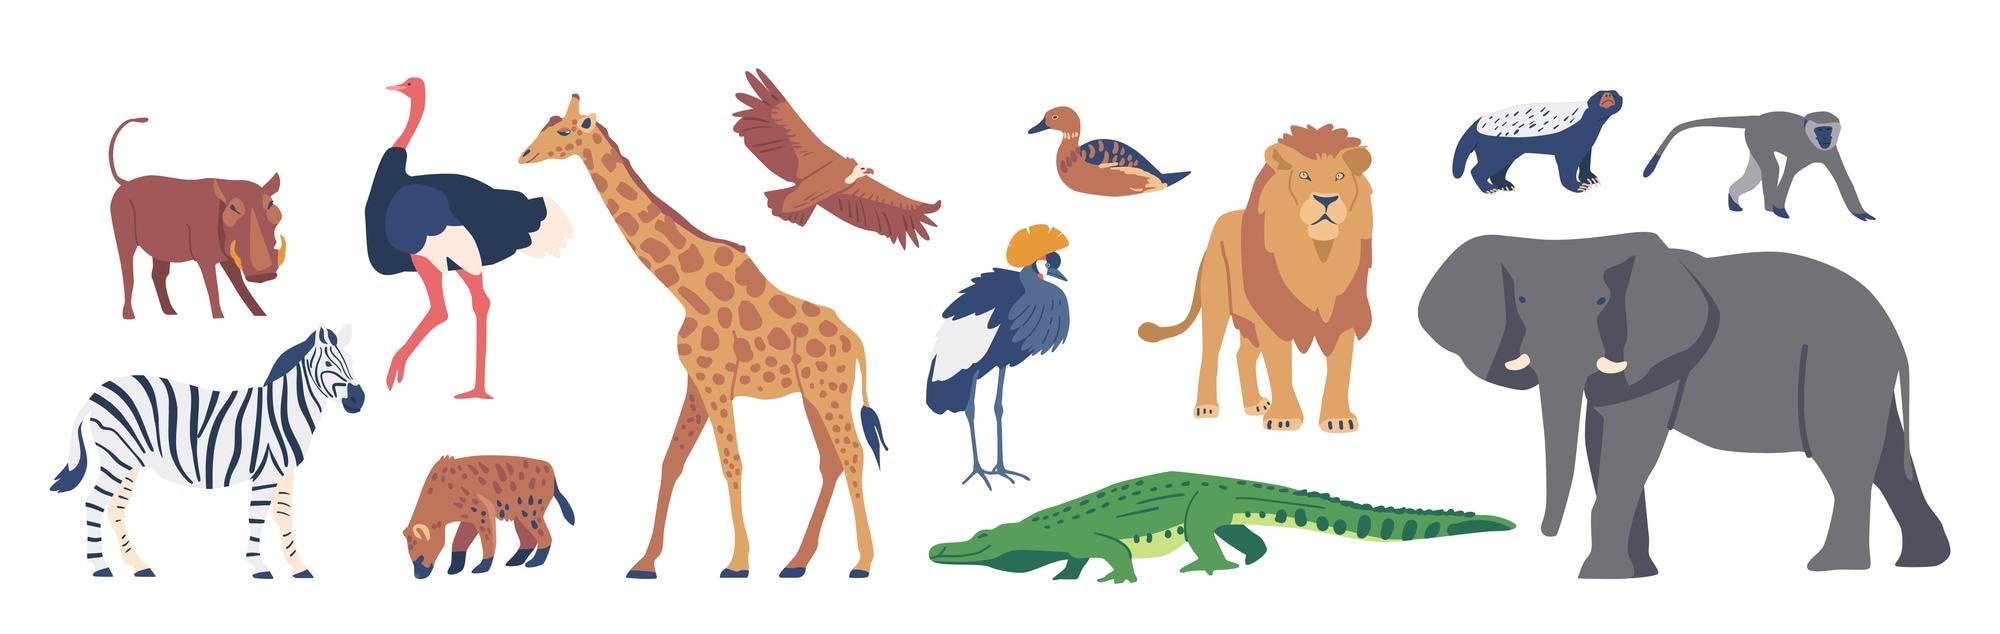 Safari bird Vectors & Illustrations for Free Download | Freepik